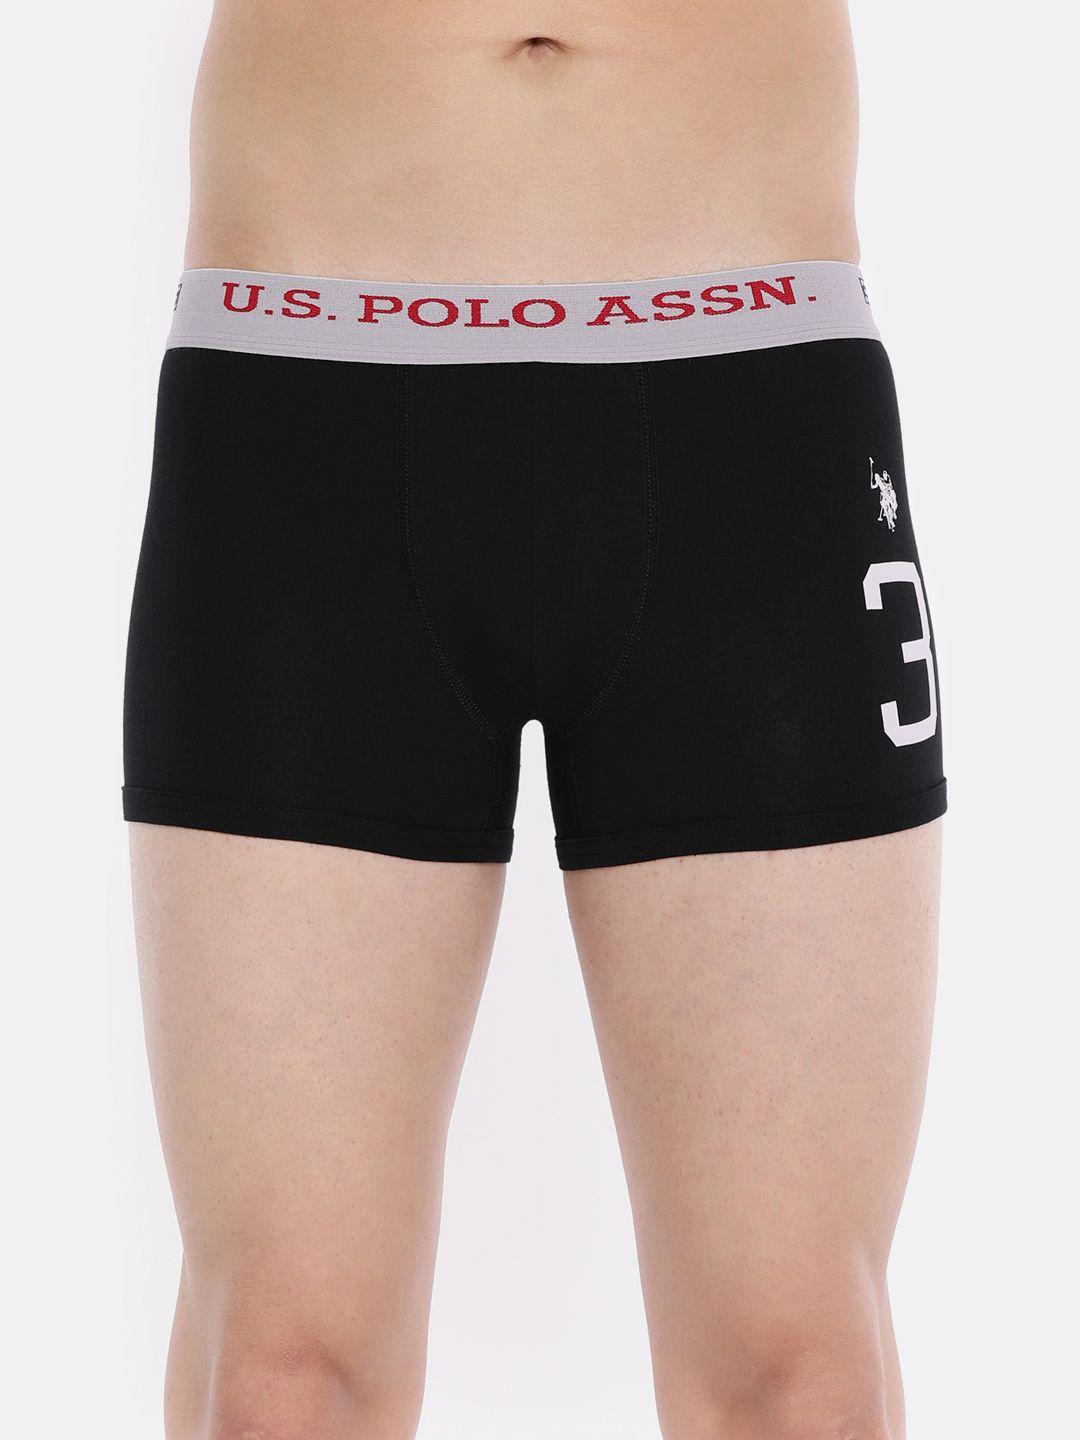 u.s. polo assn. men black solid trunks y9i015-002-p1